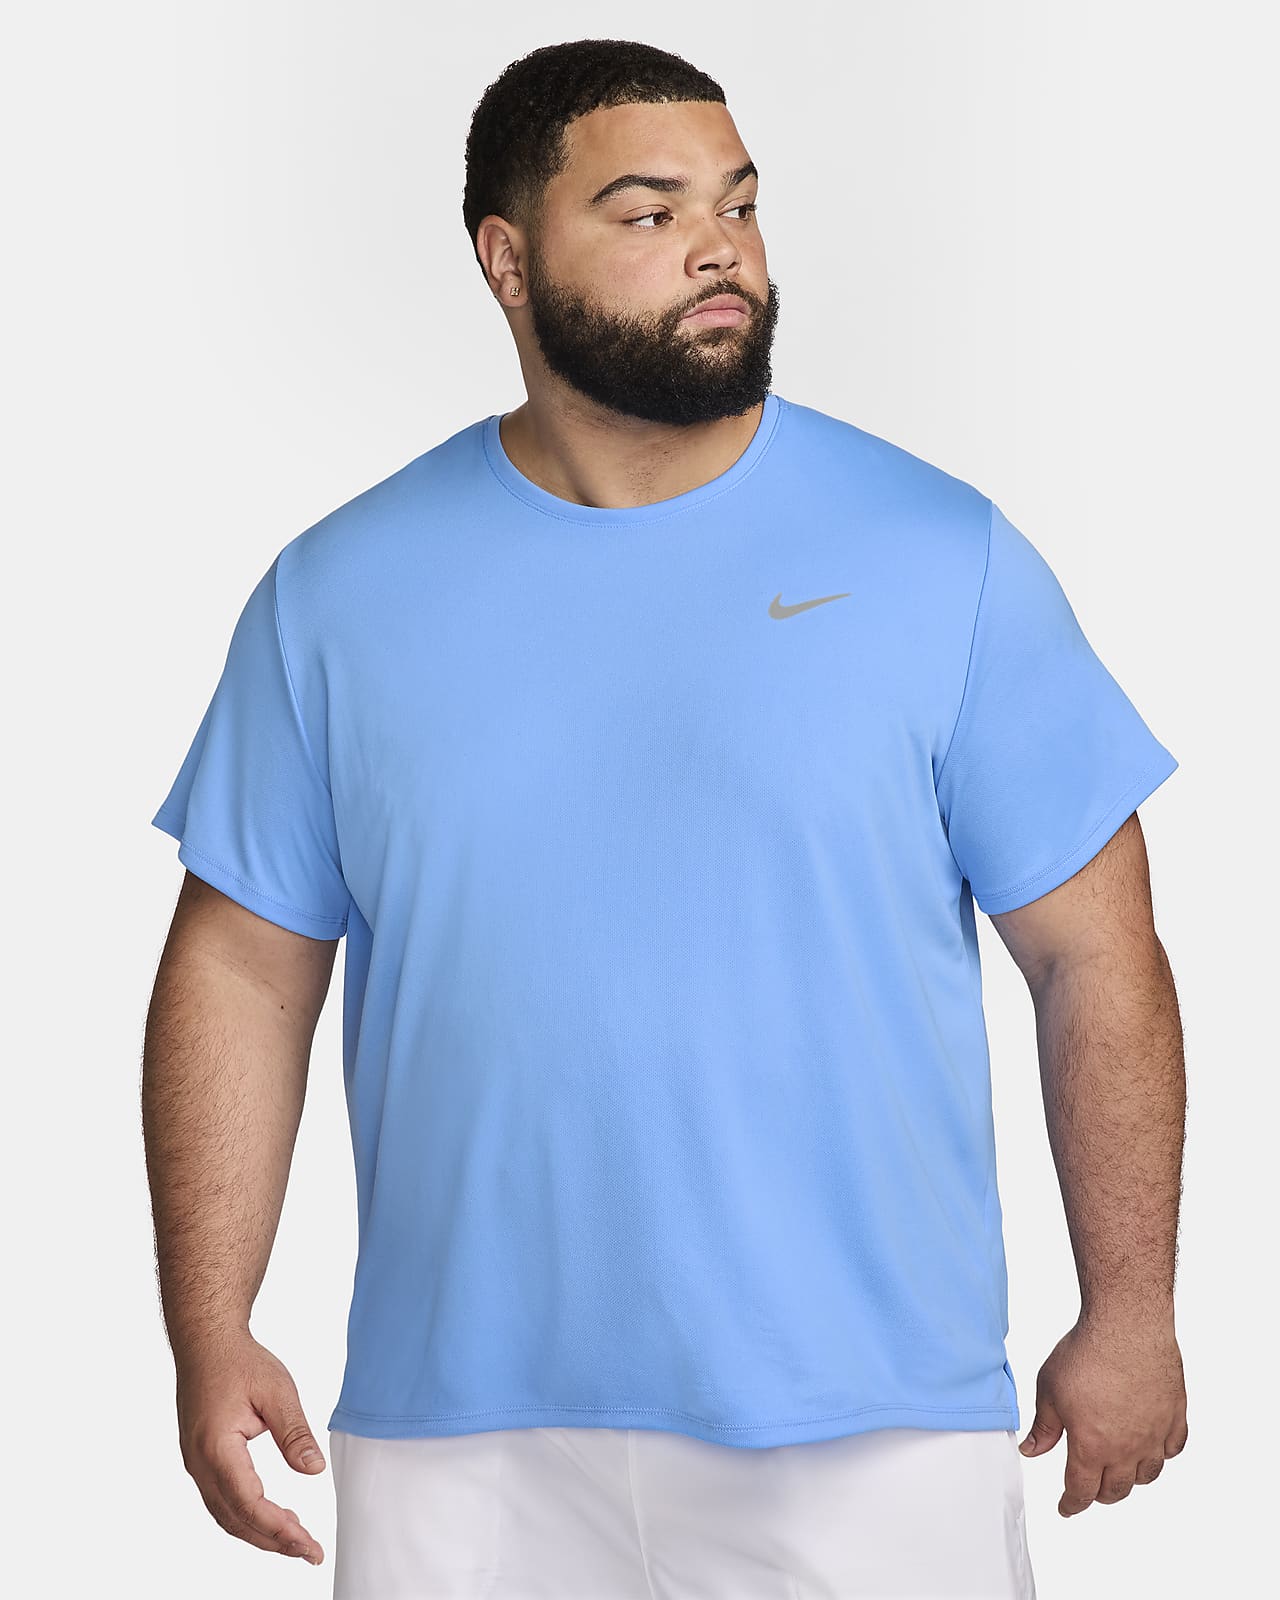 Nike Unisex Lightweight Running Sleeve